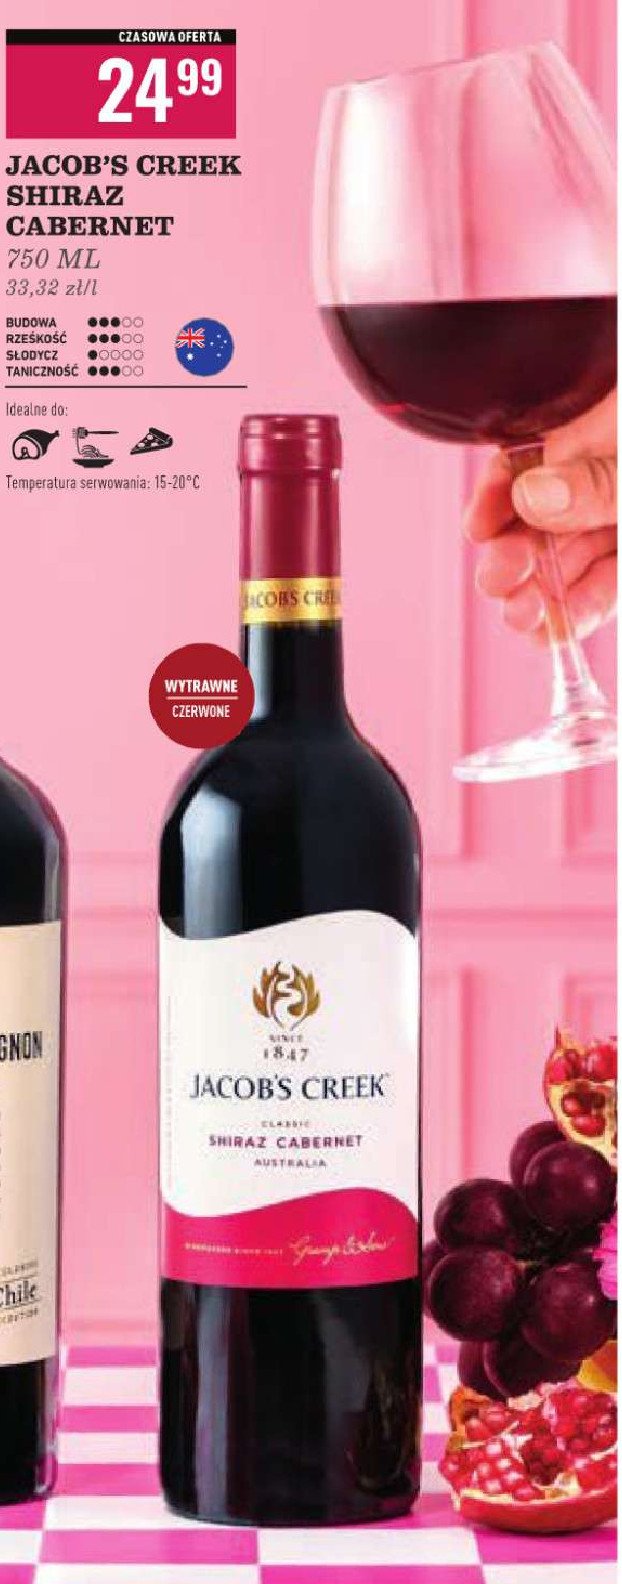 Wino Jacob's creek shiraz cabernet promocja